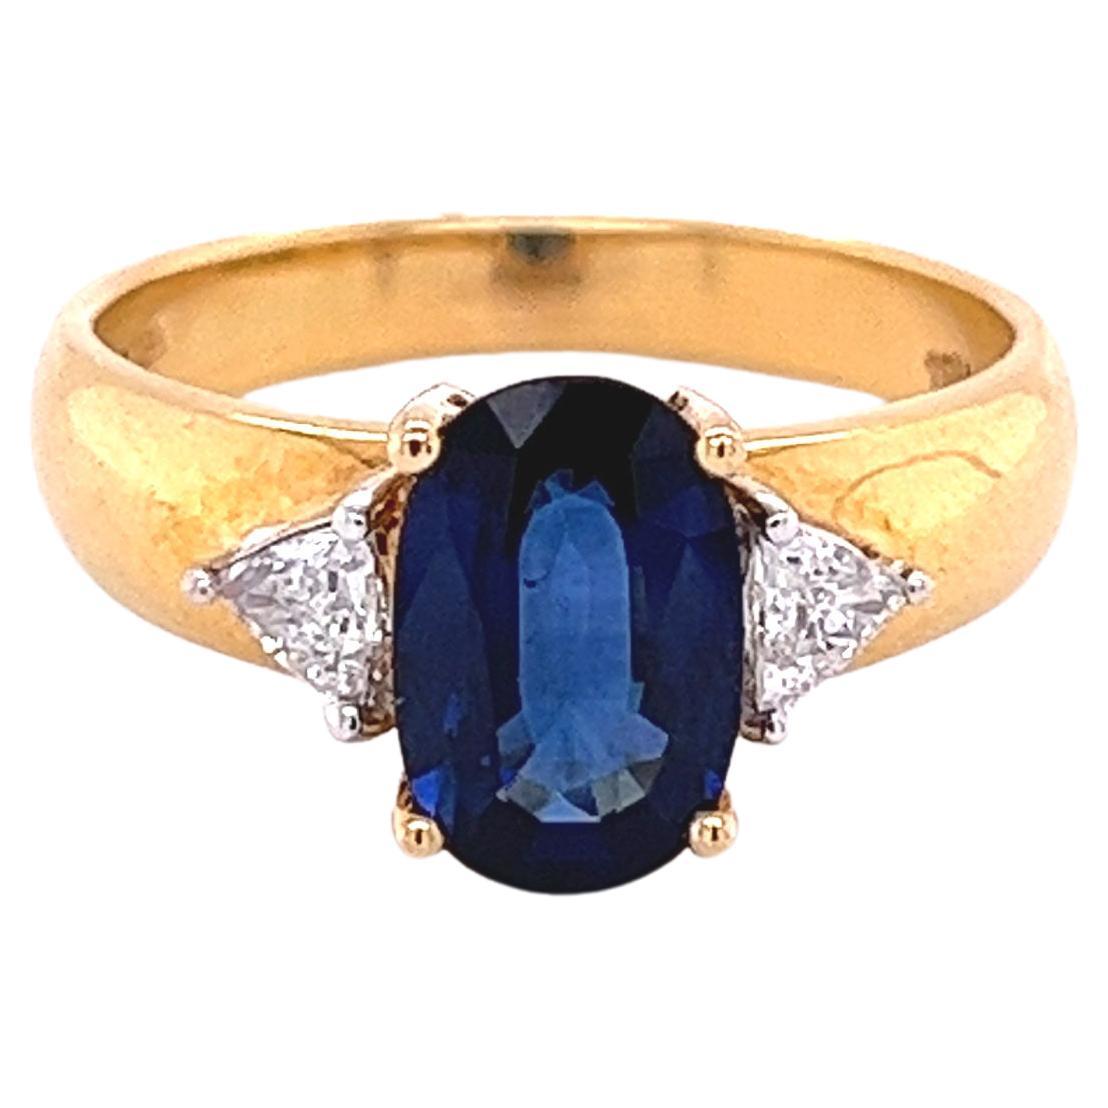 2.32 Carat Oval Cut Blue Sapphire with Trillion Cut Diamond Sidestones in 18k  For Sale